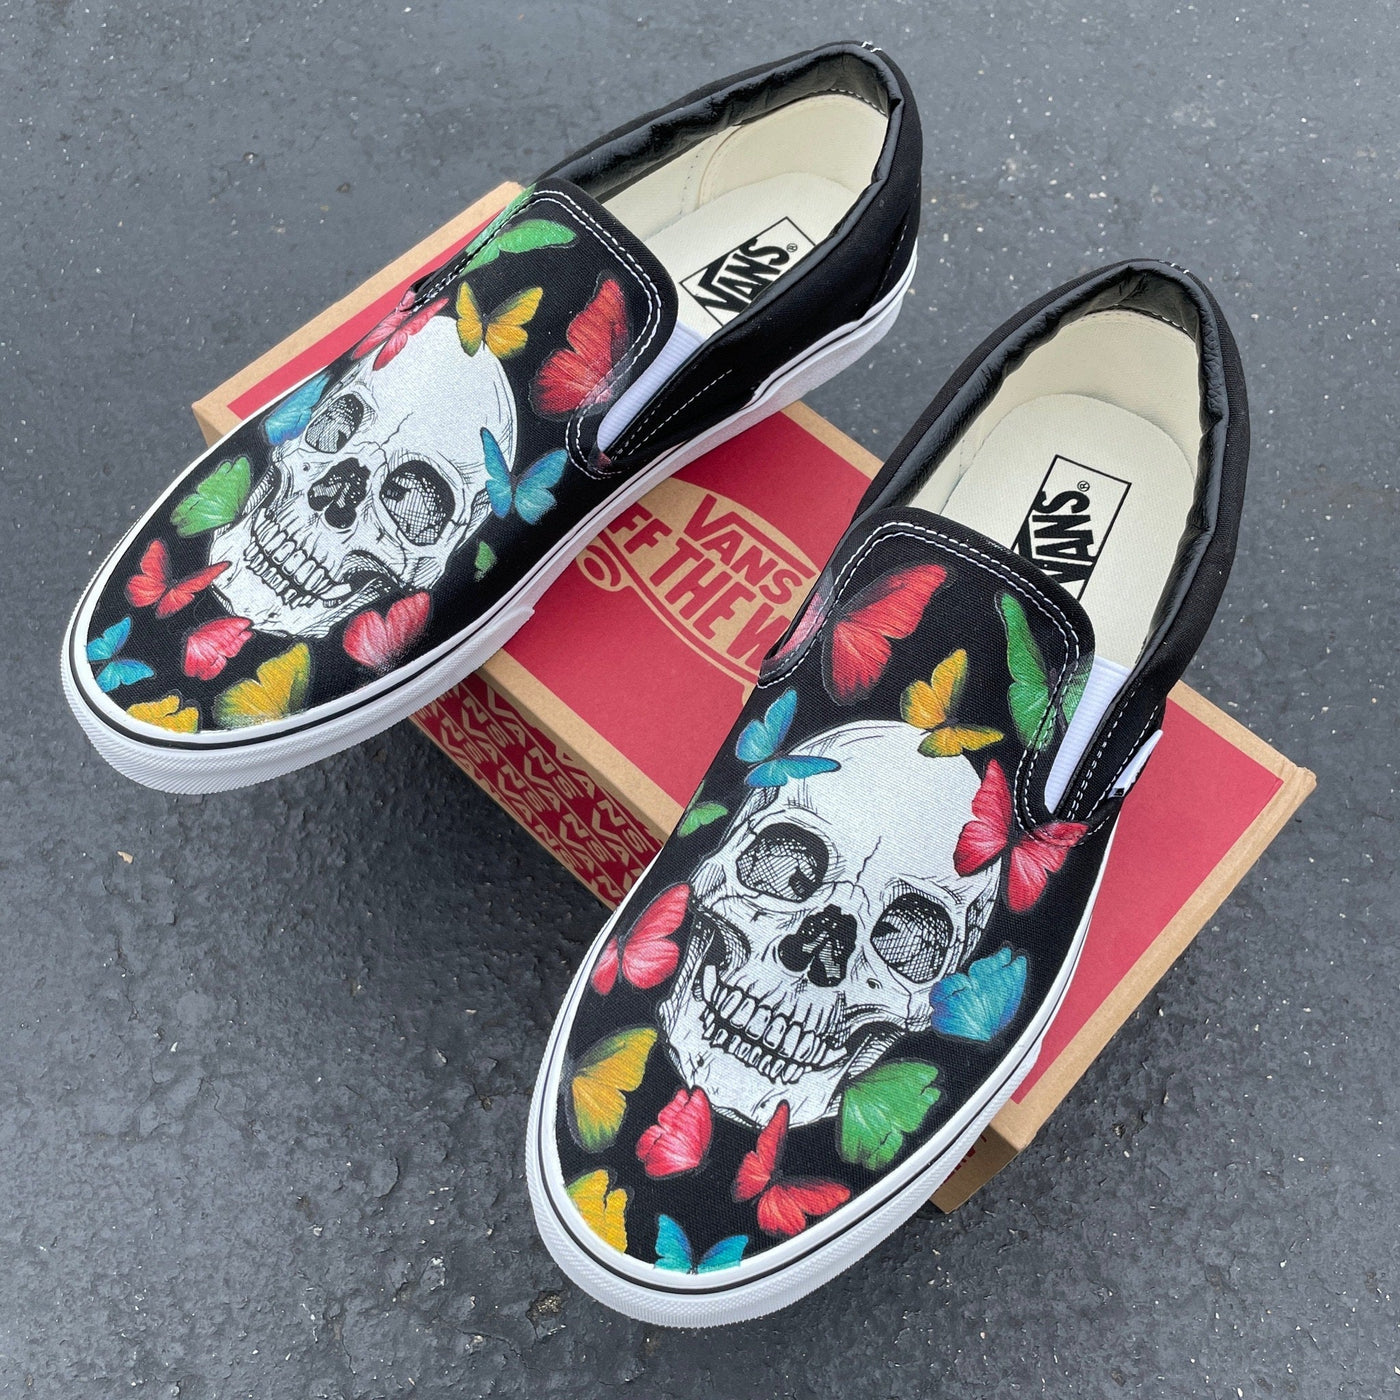 Skulls on Vans Slip On shoes with Butterflies, Custom Shoes